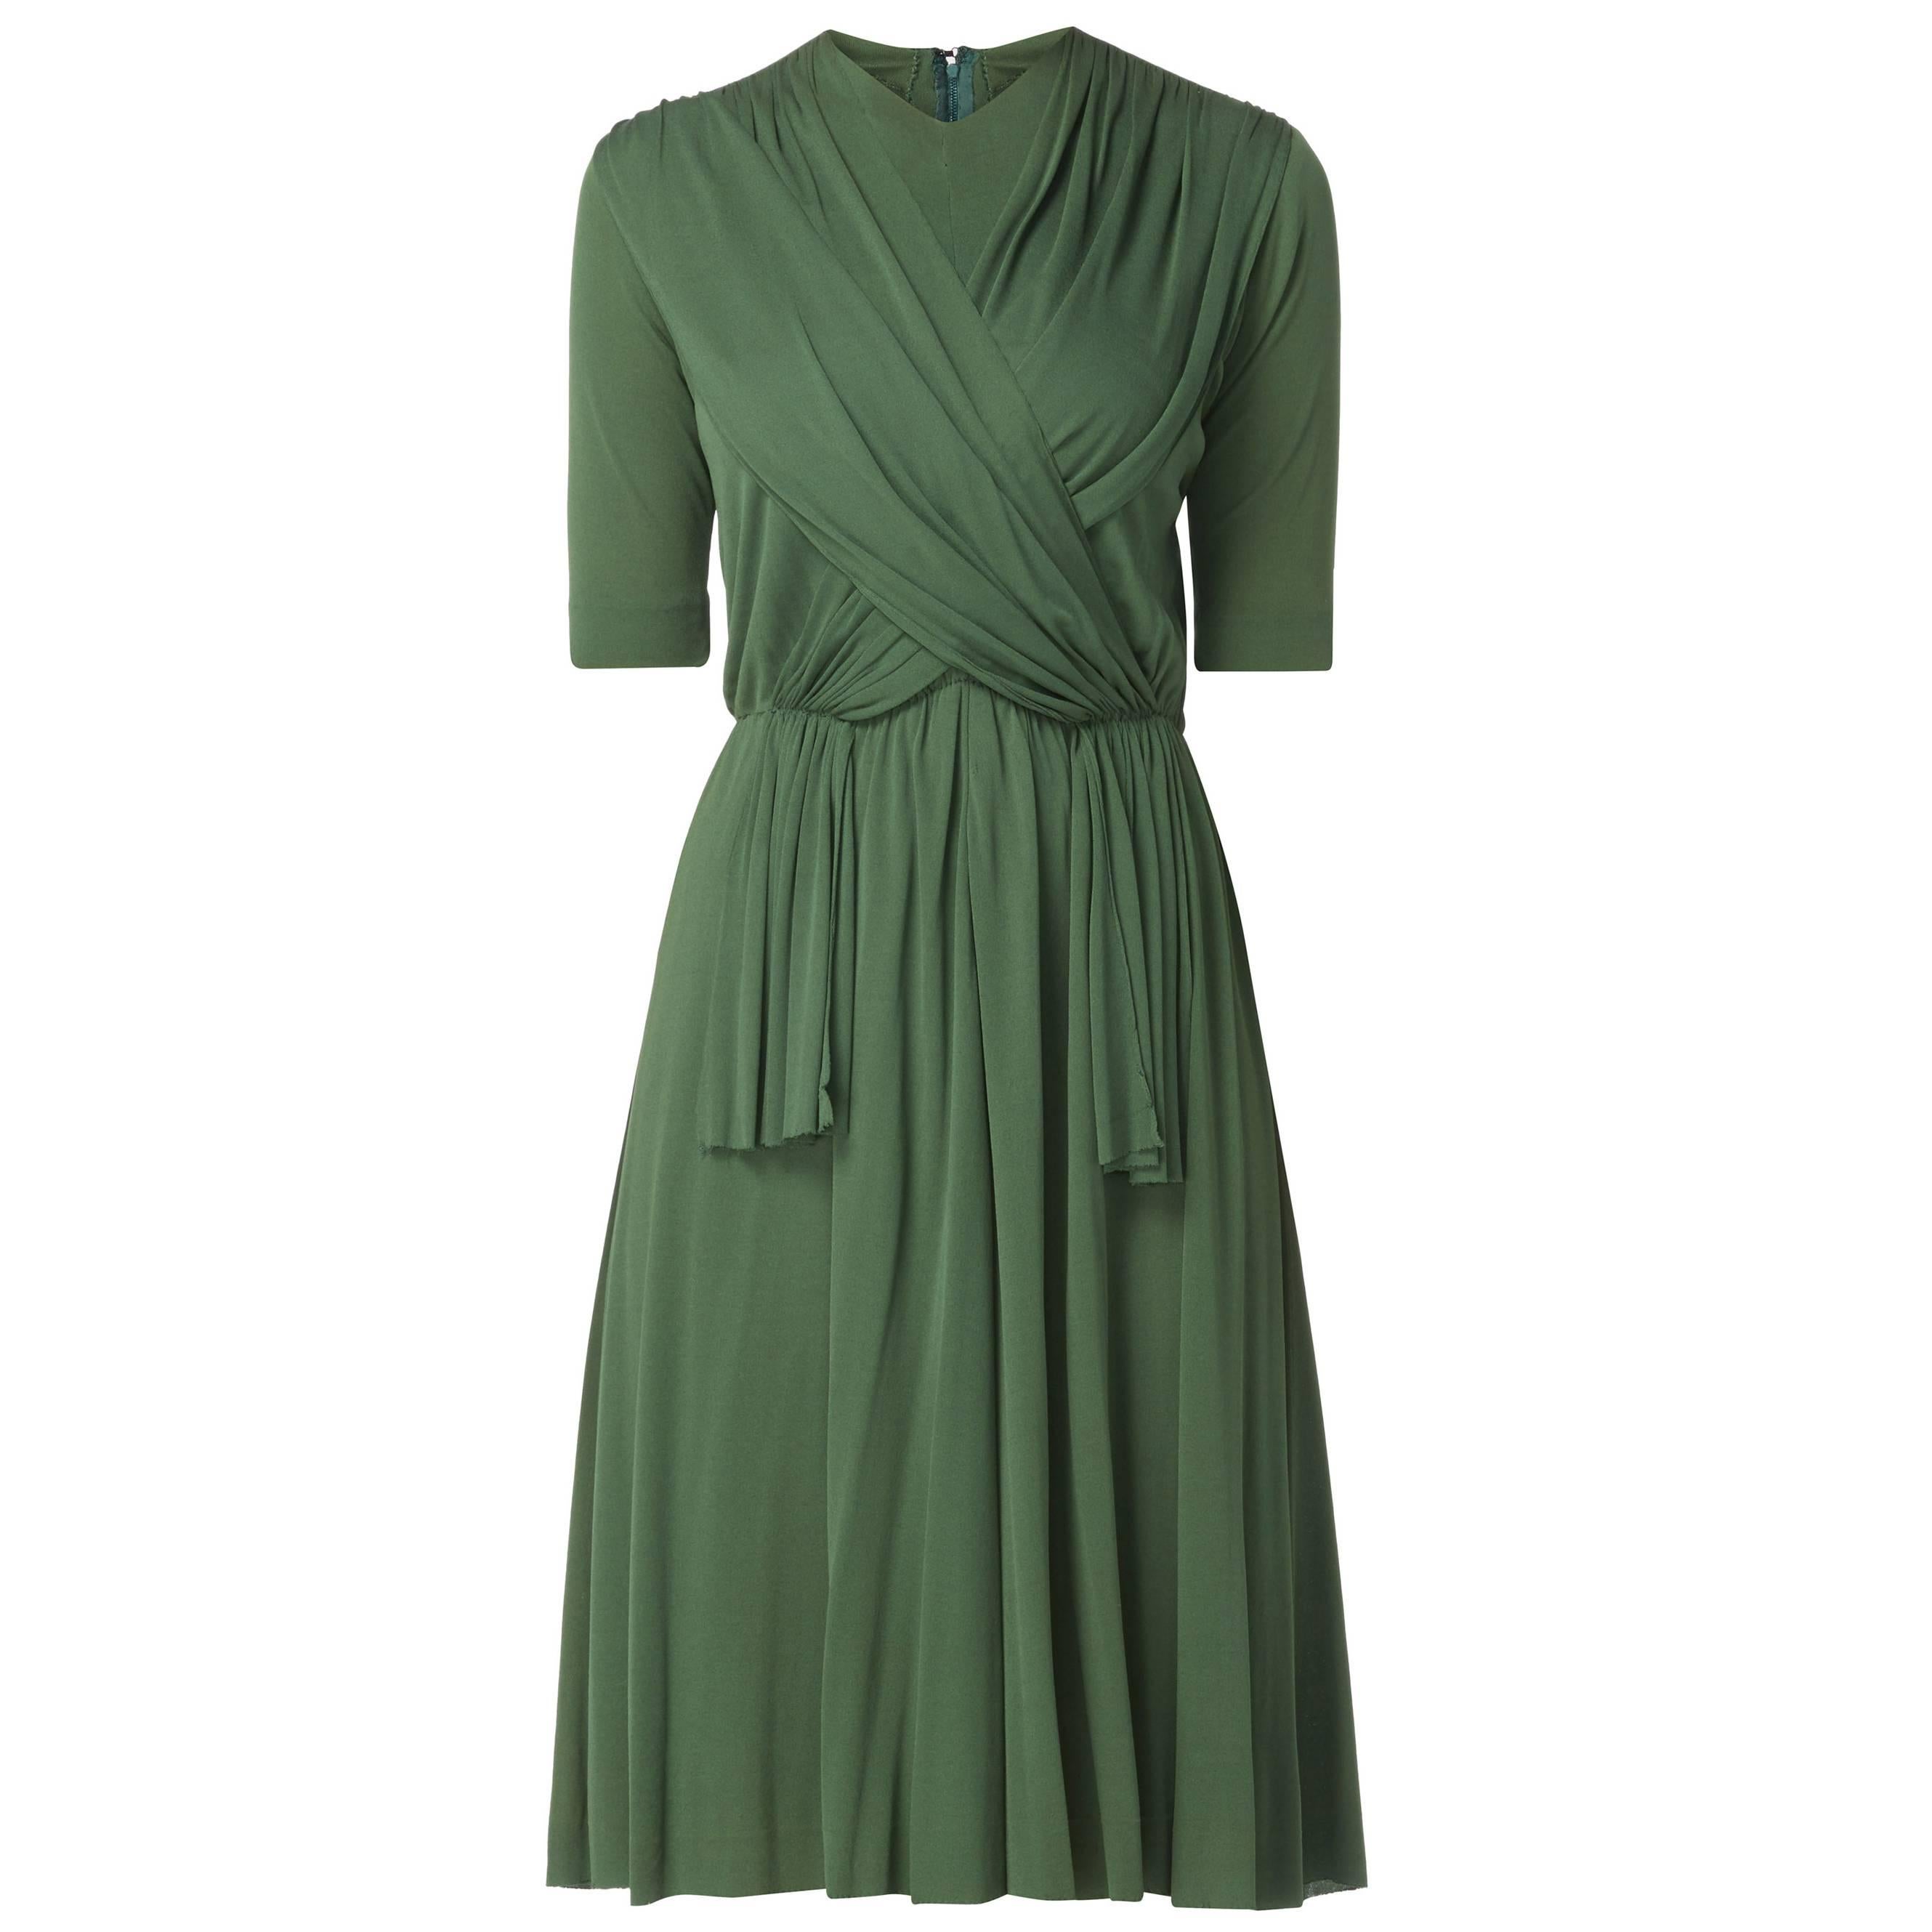 Madame Grès haute couture green dress, circa 1945